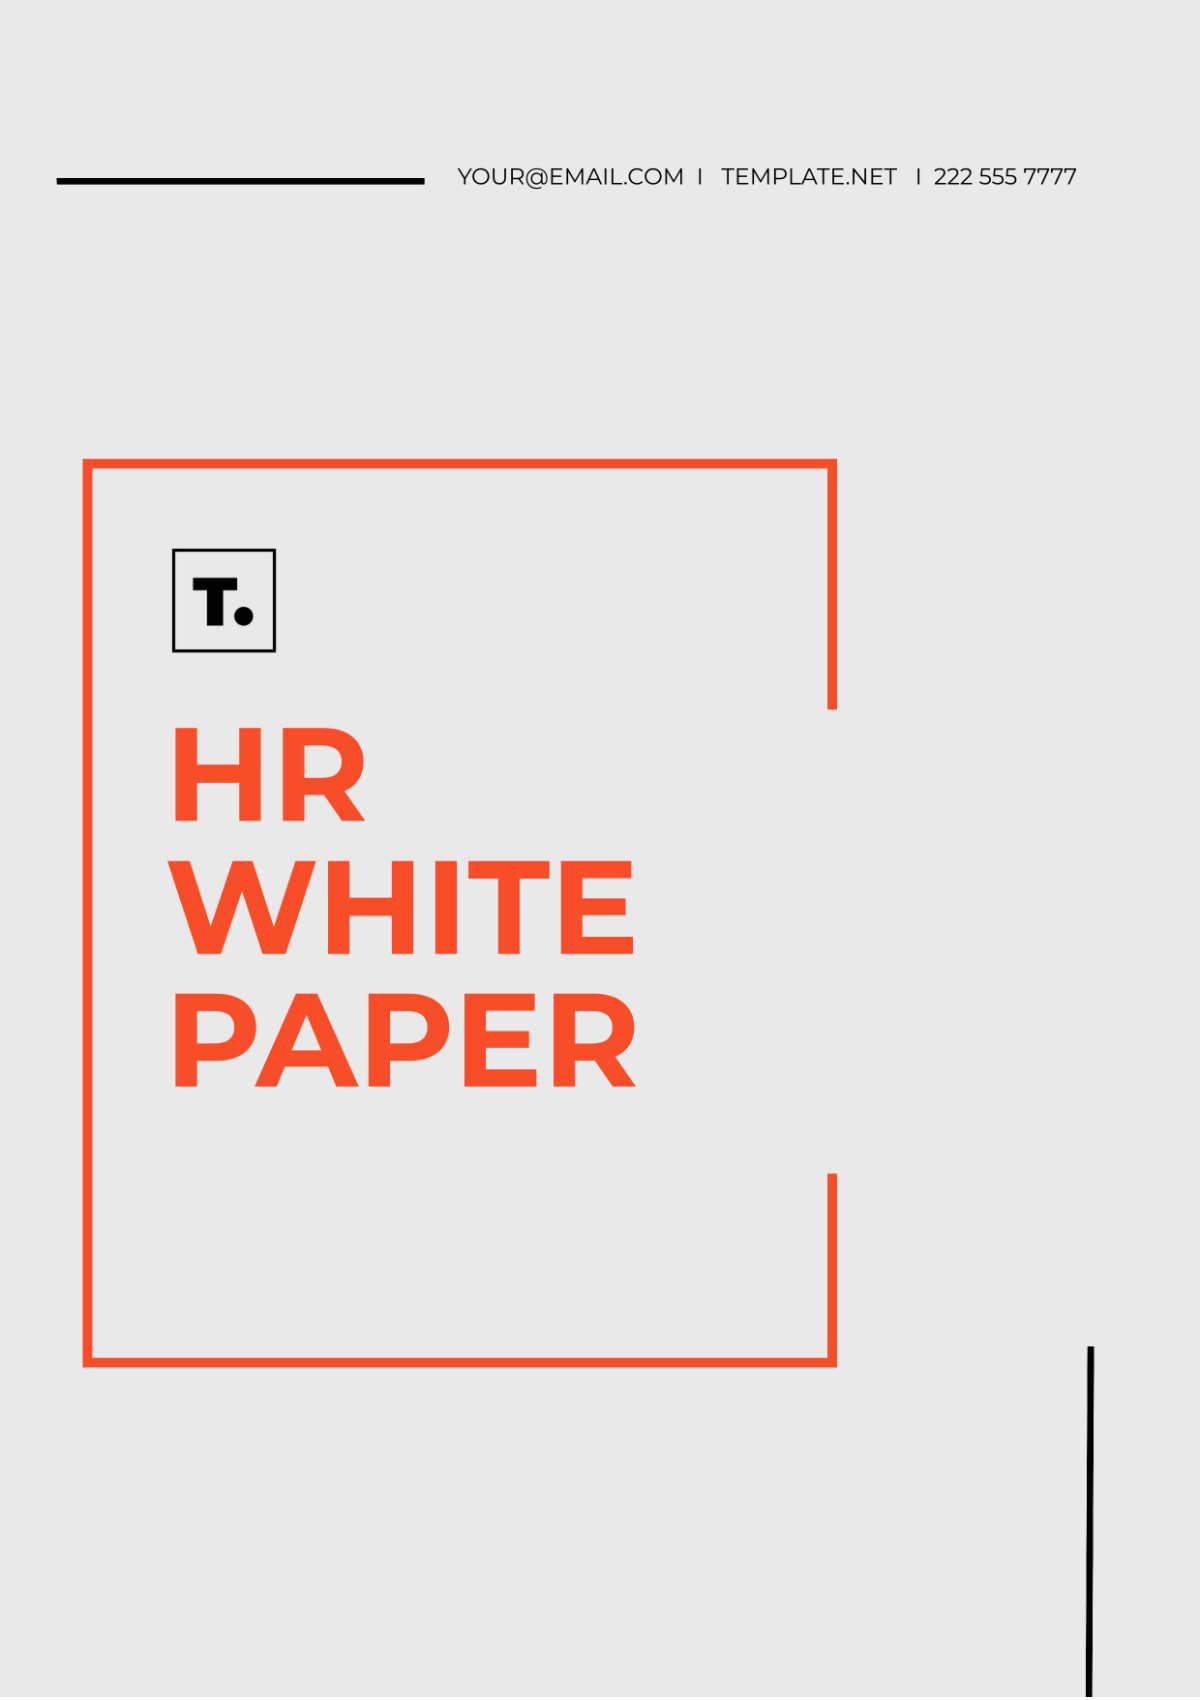 HR White Paper Template